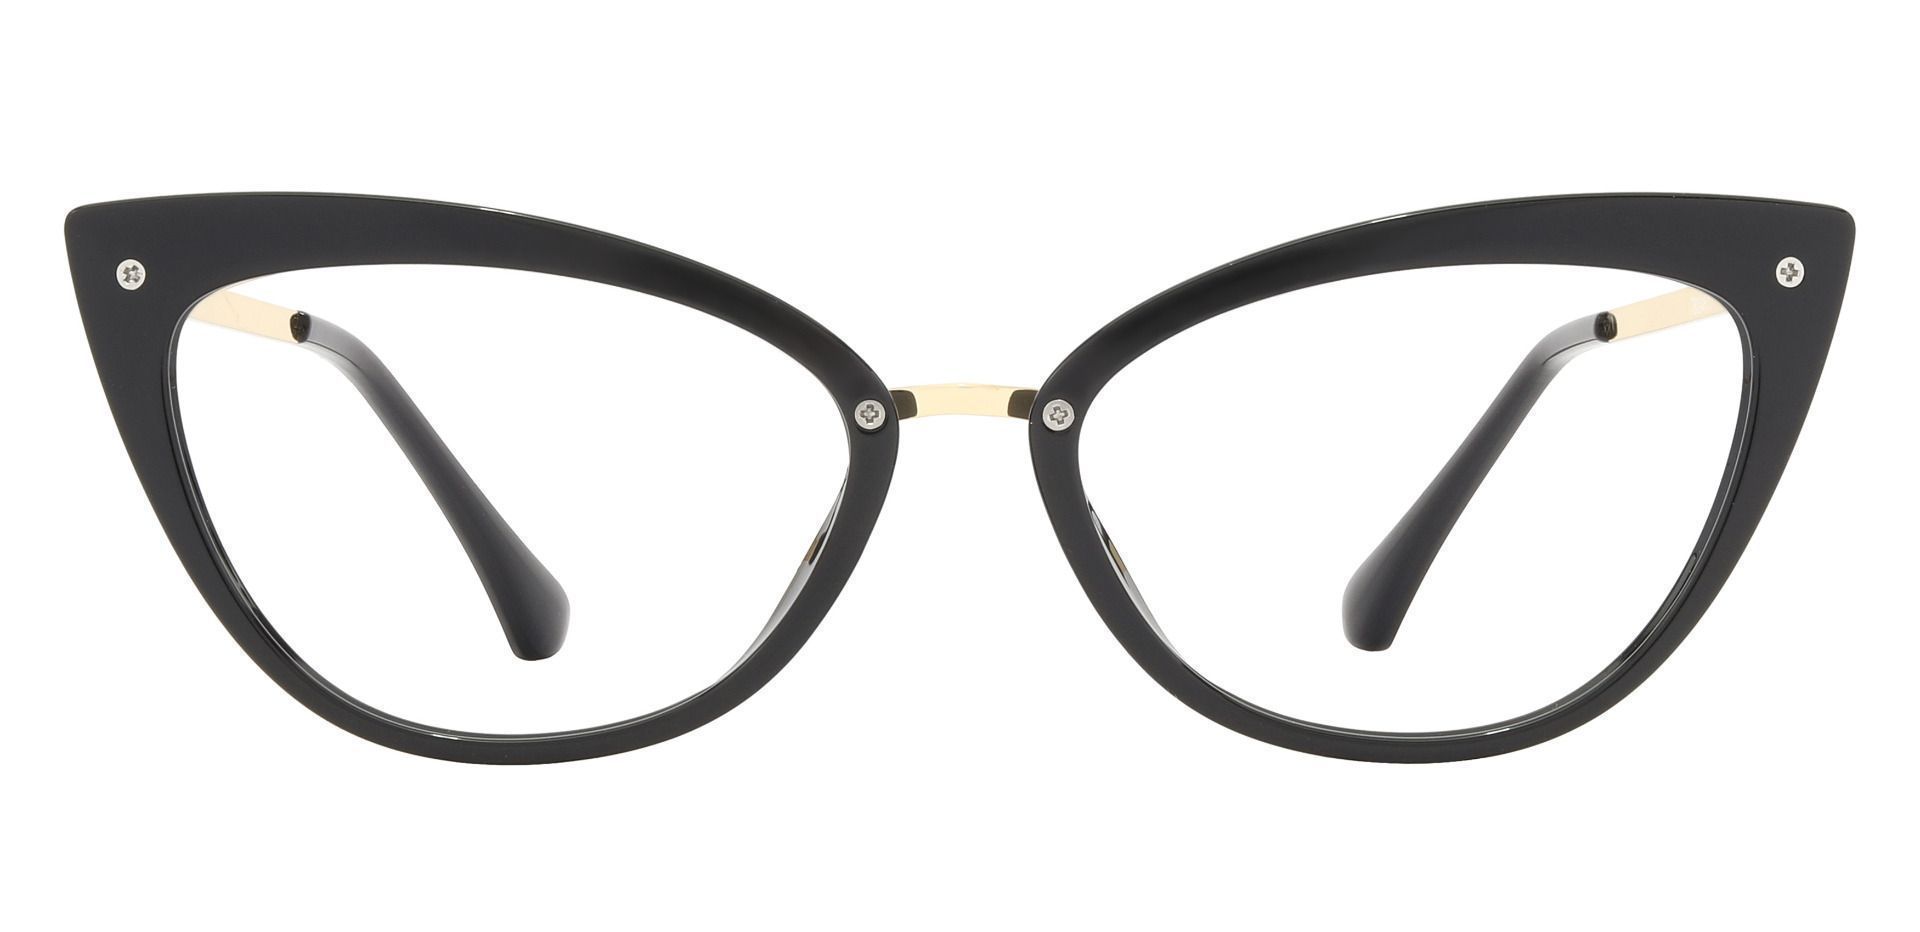 Glenda Cat Eye Prescription Glasses - Black